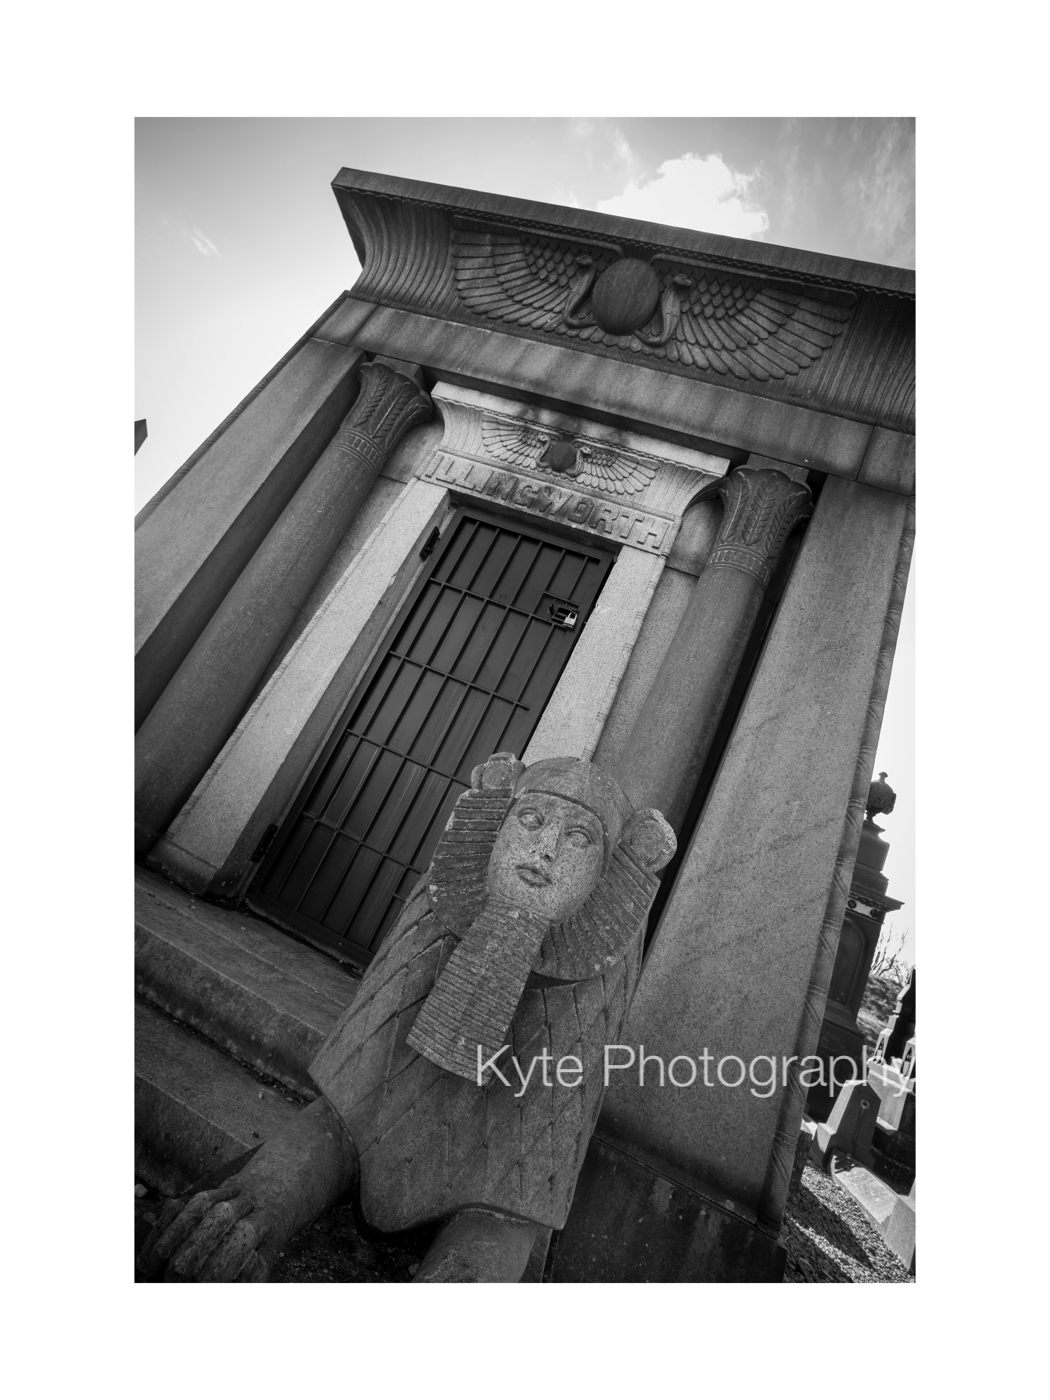 ‘Resurrecting Ancient Egypt’ touring exhibition comes to Bradford.